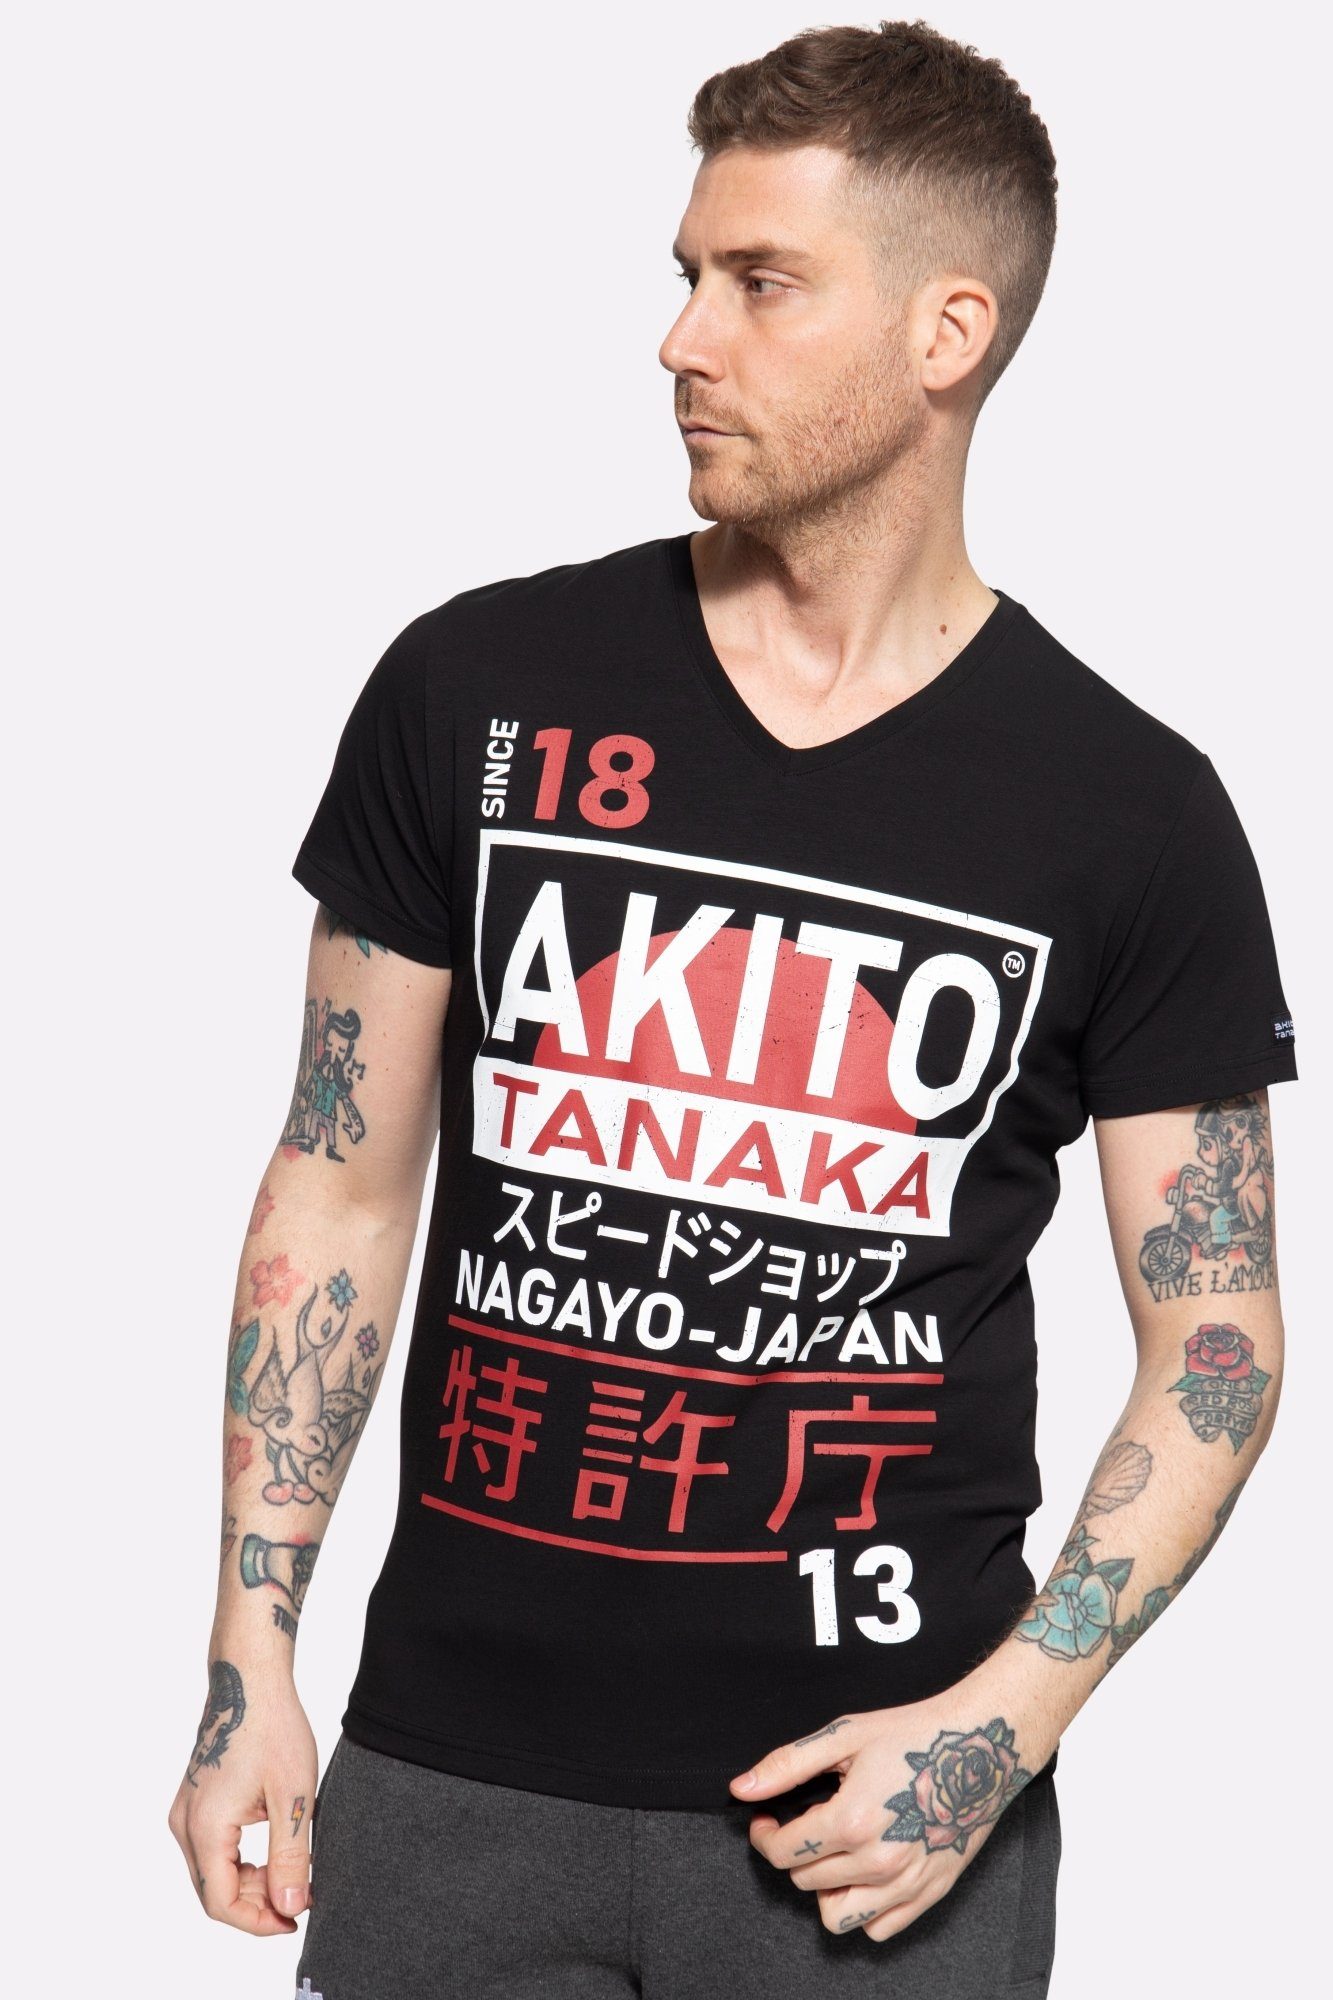 schwarz Tanaka Frontprint Sun Akito T-Shirt coolem mit Nagayo